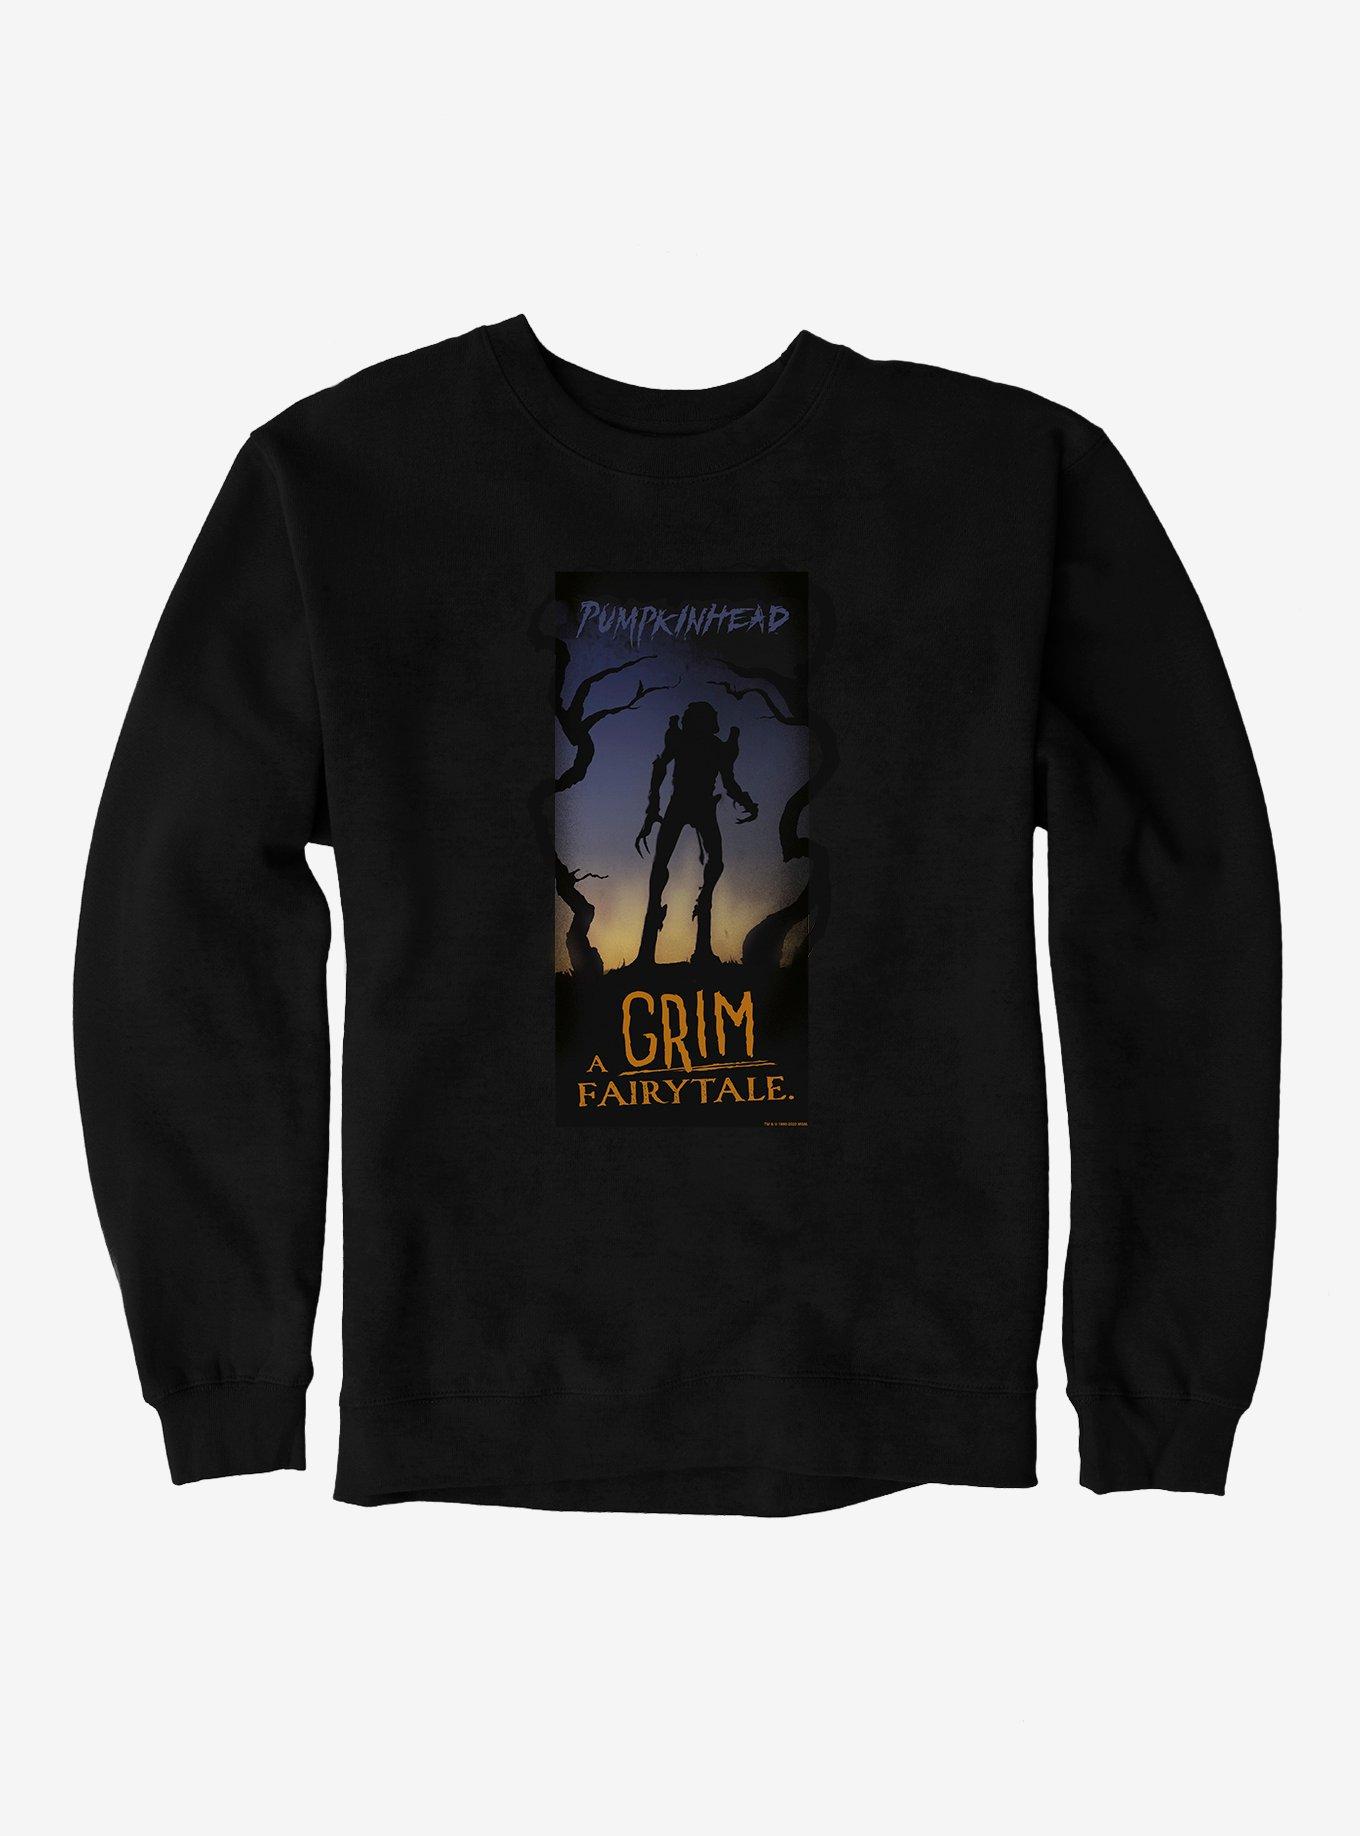 Pumpkinhead Grim Fairytale Sweatshirt, , hi-res